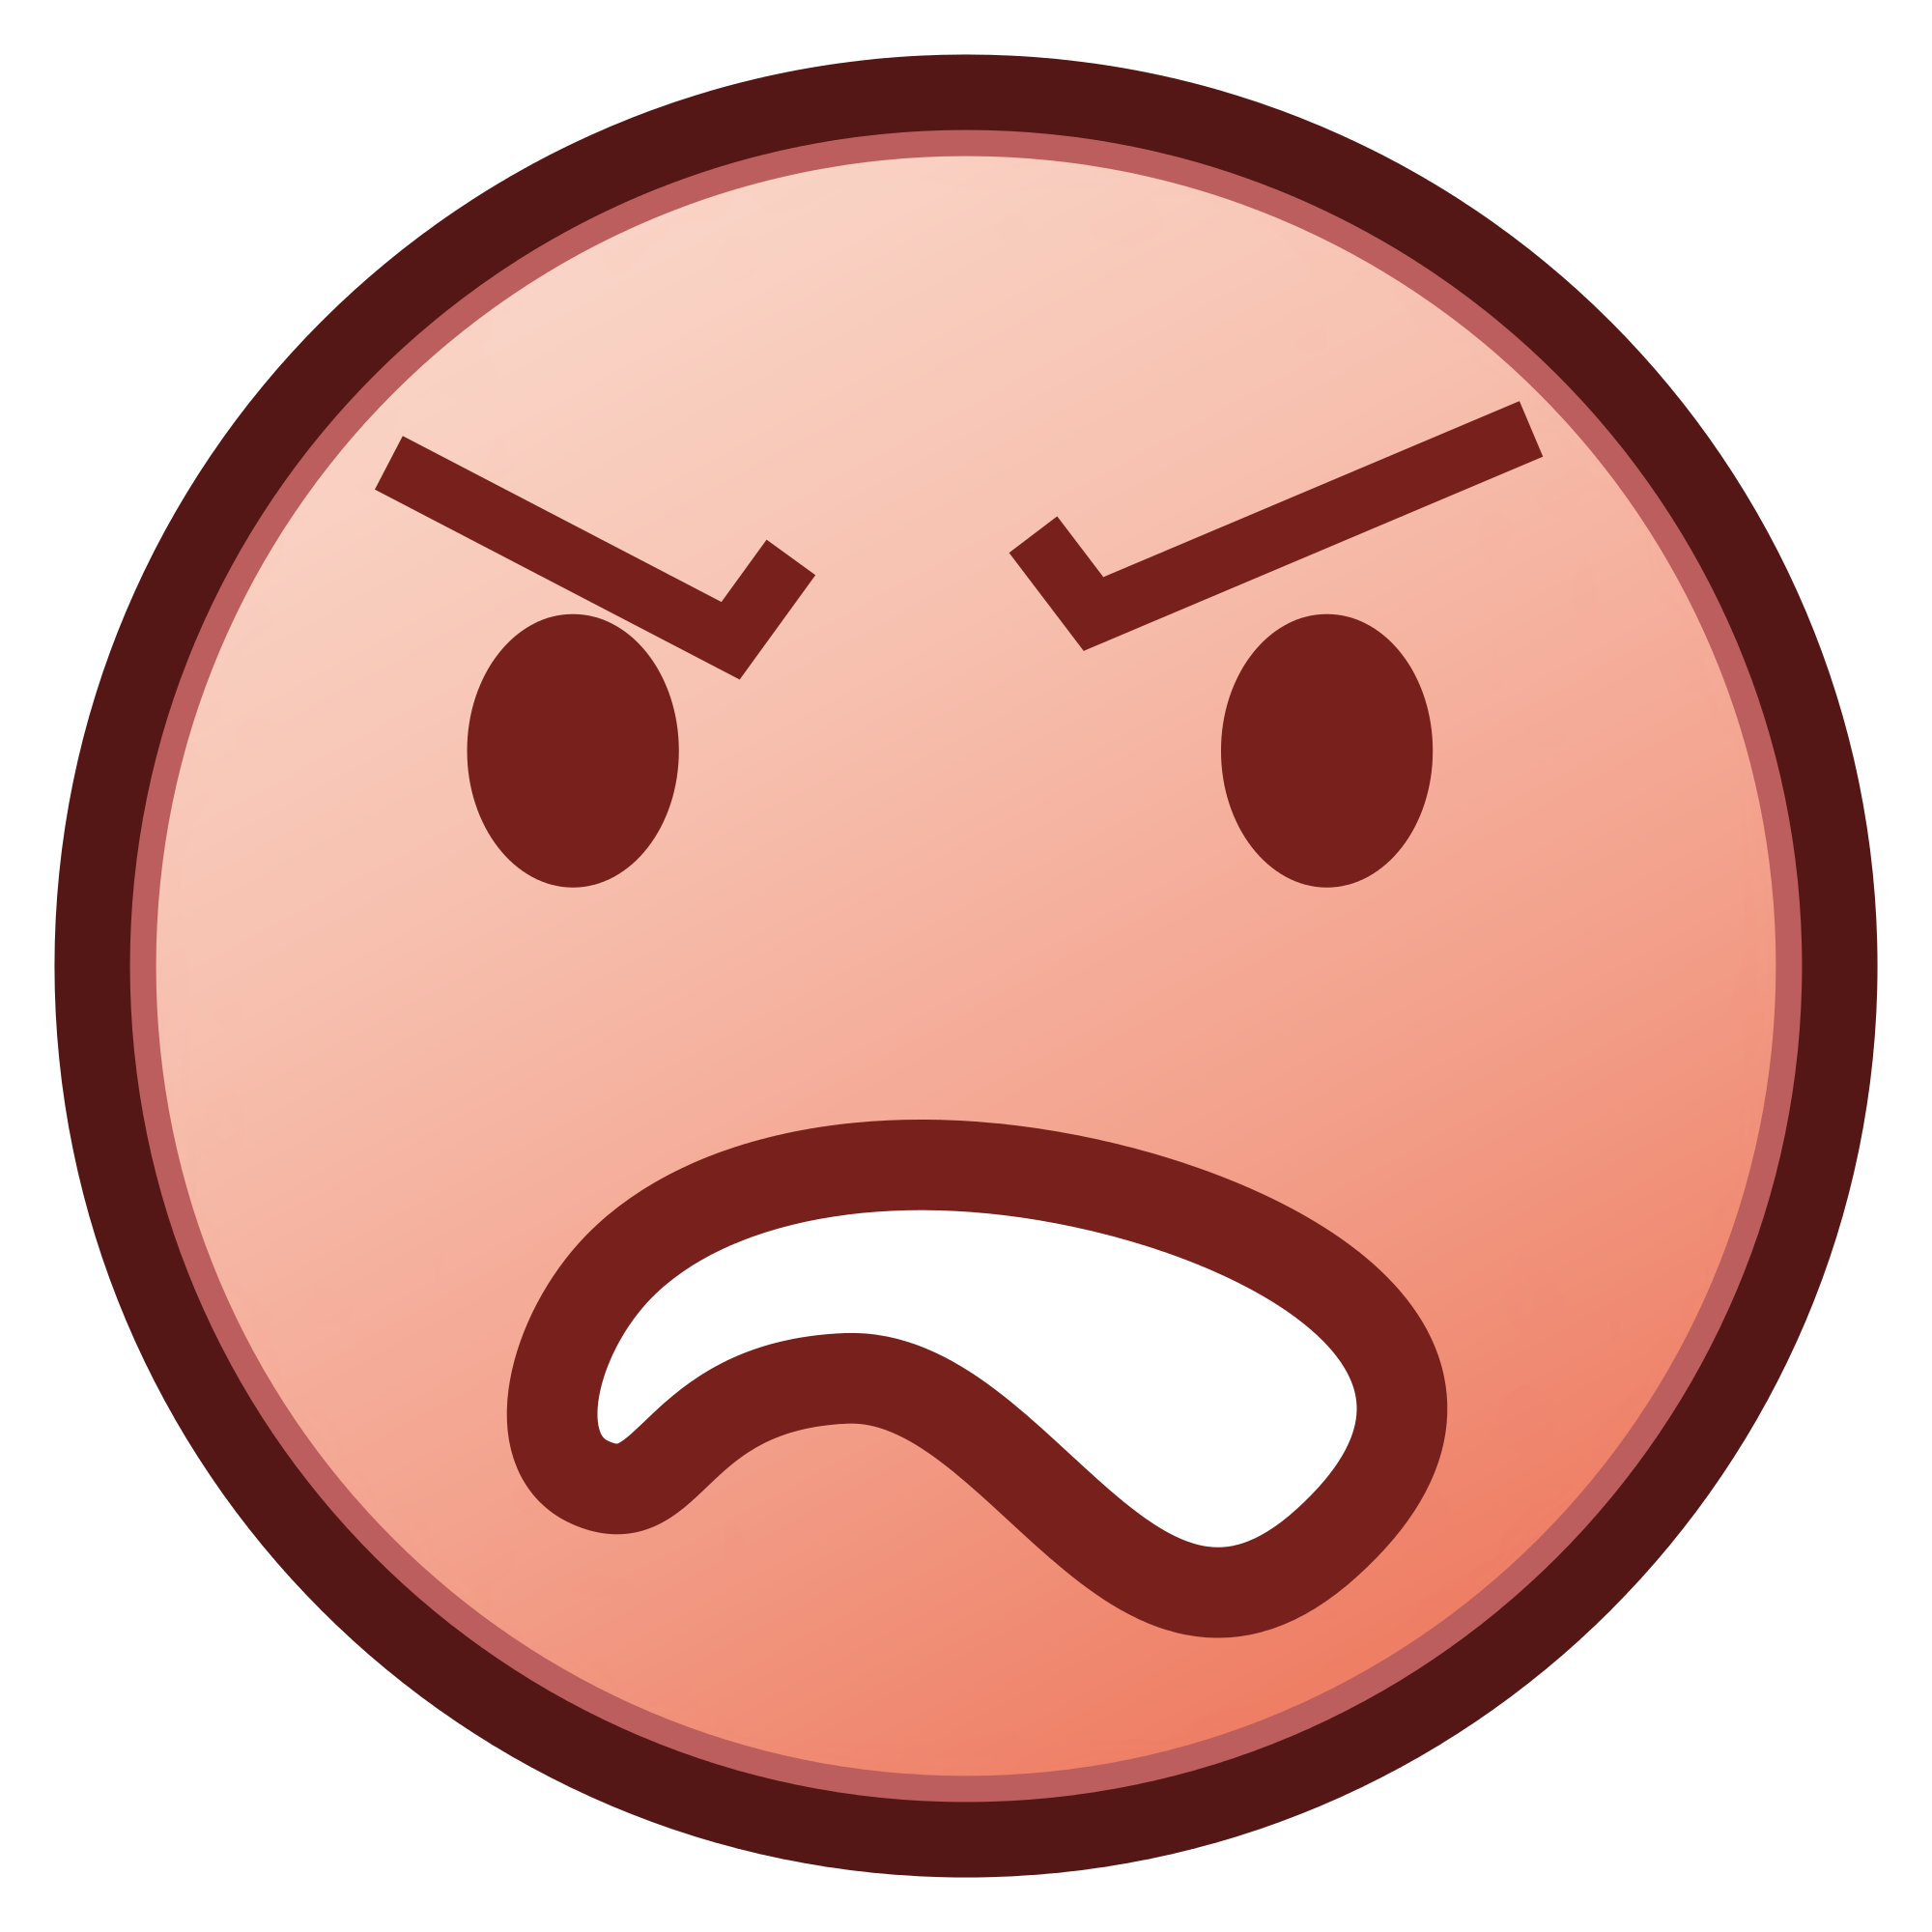 Download Angry Emoji Free Download HQ PNG Image FreePNGImg.